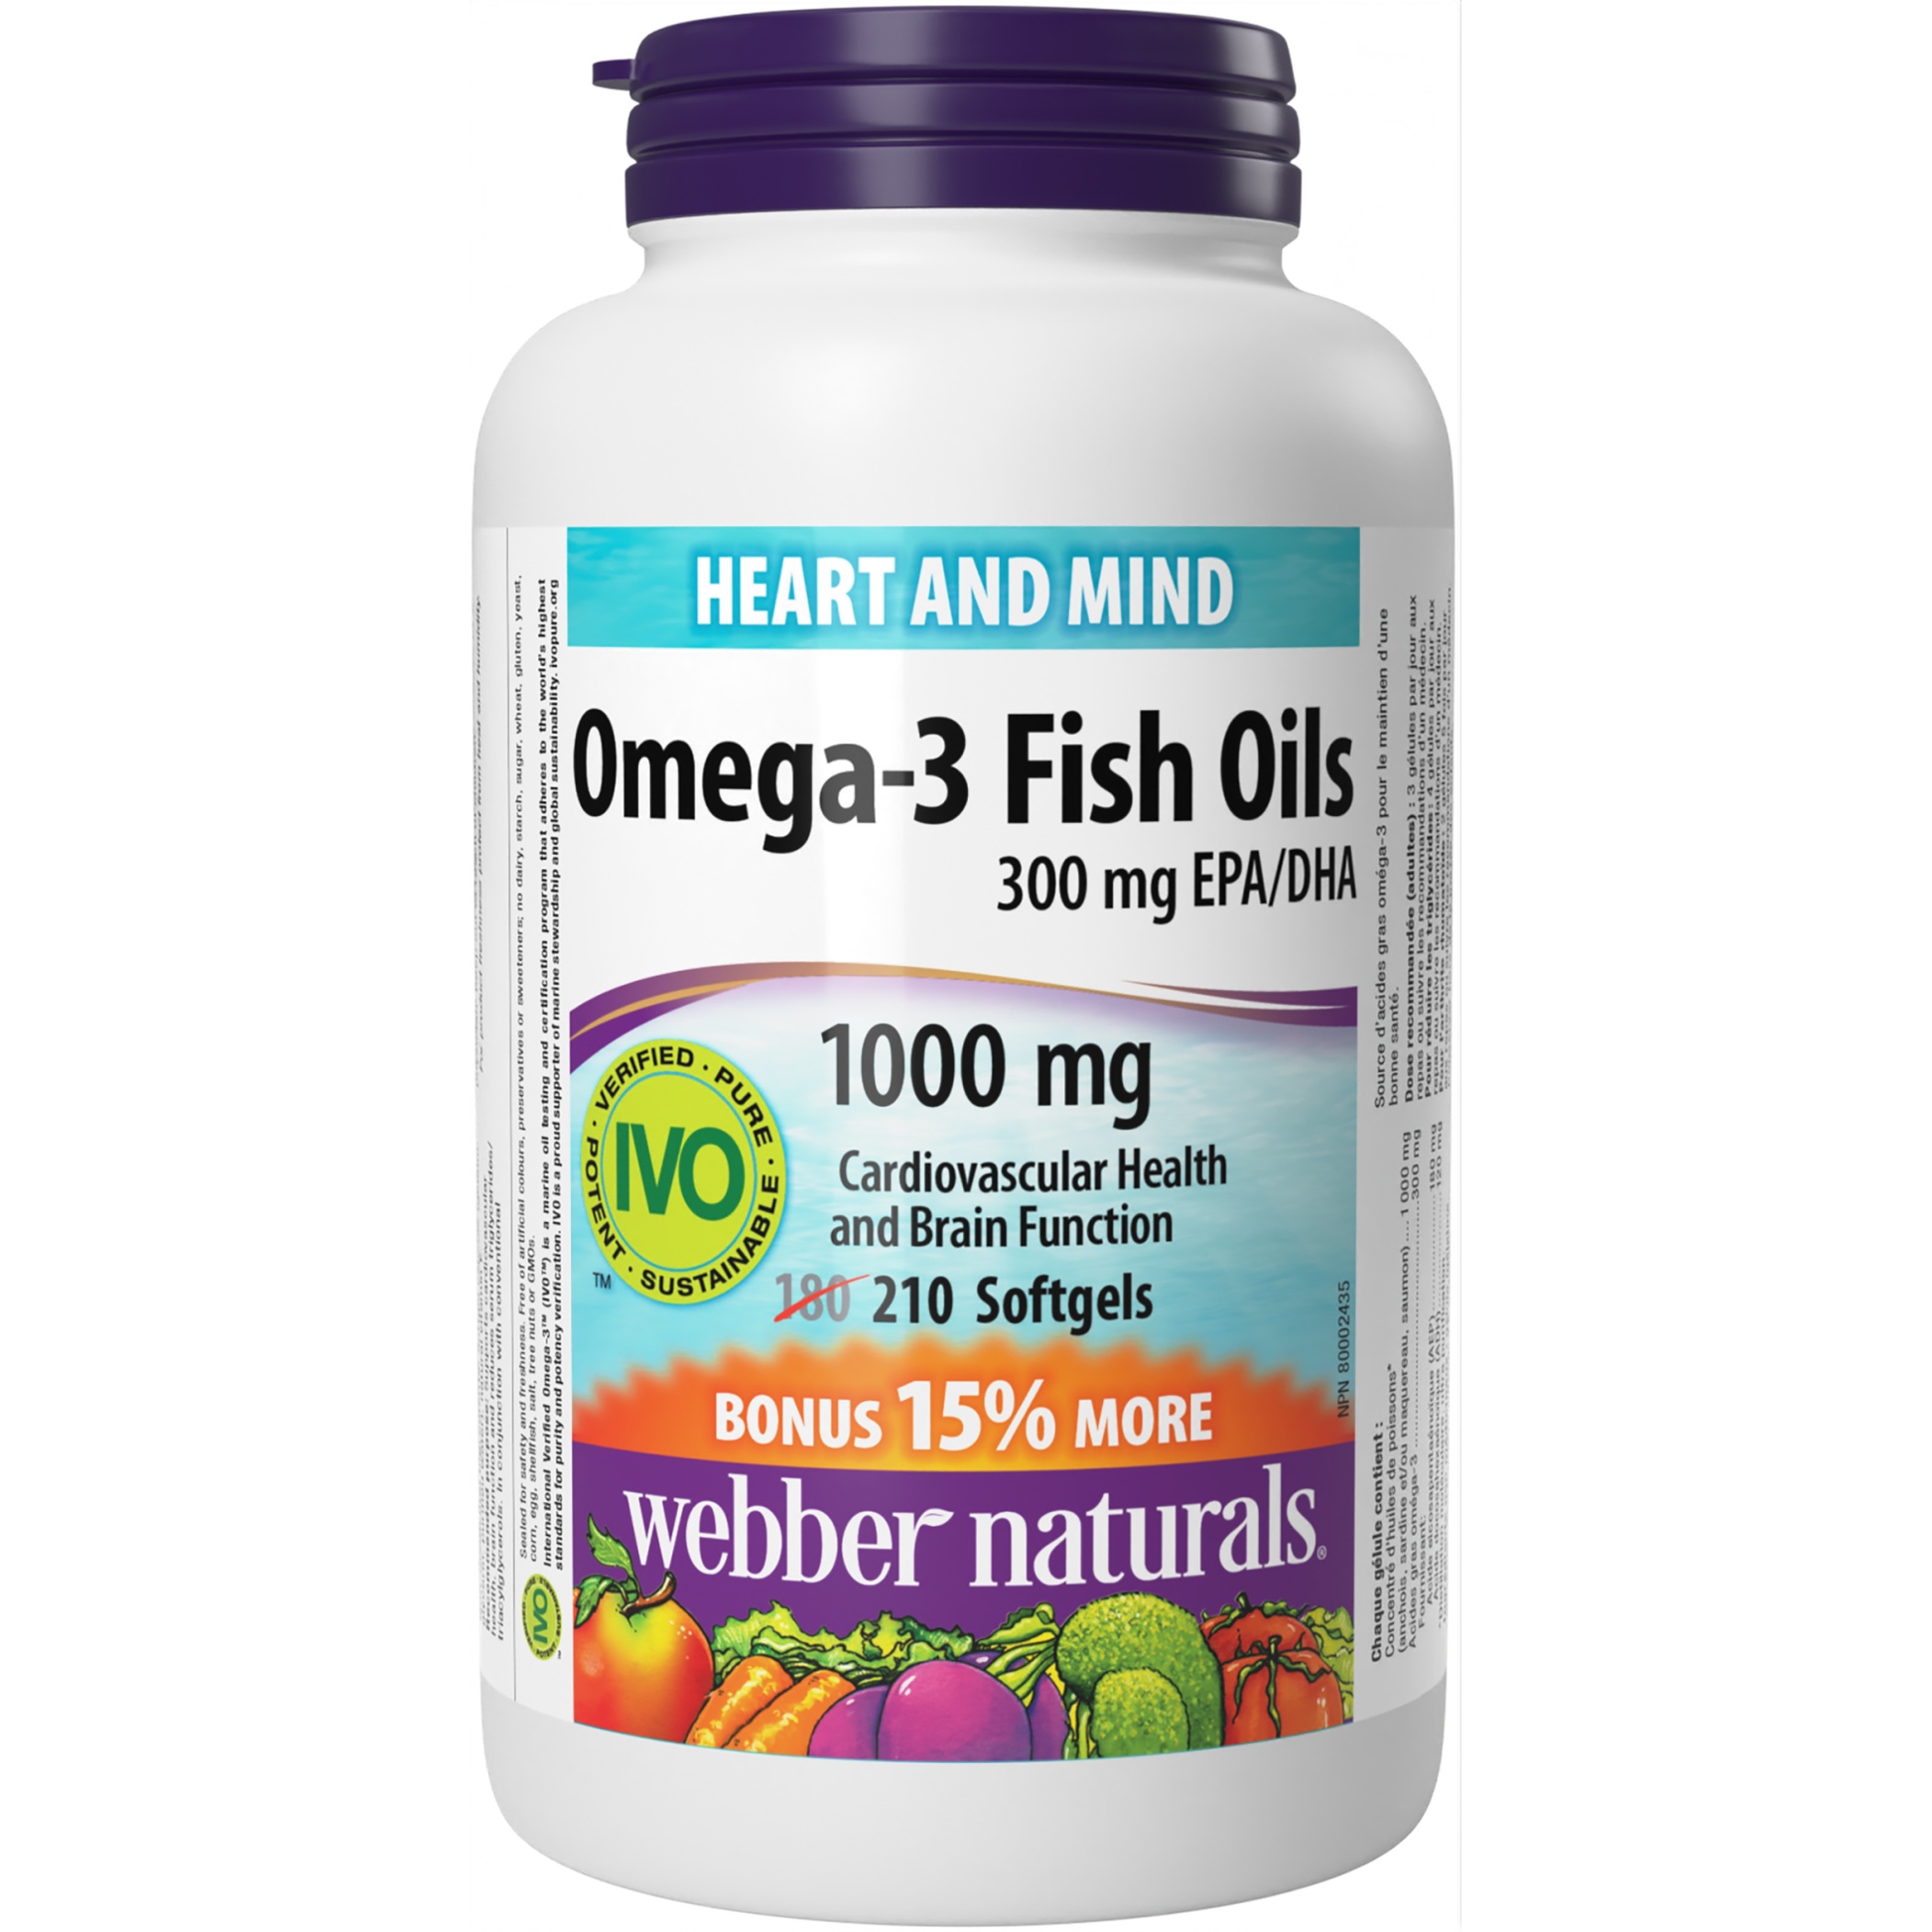 Omega- supplements